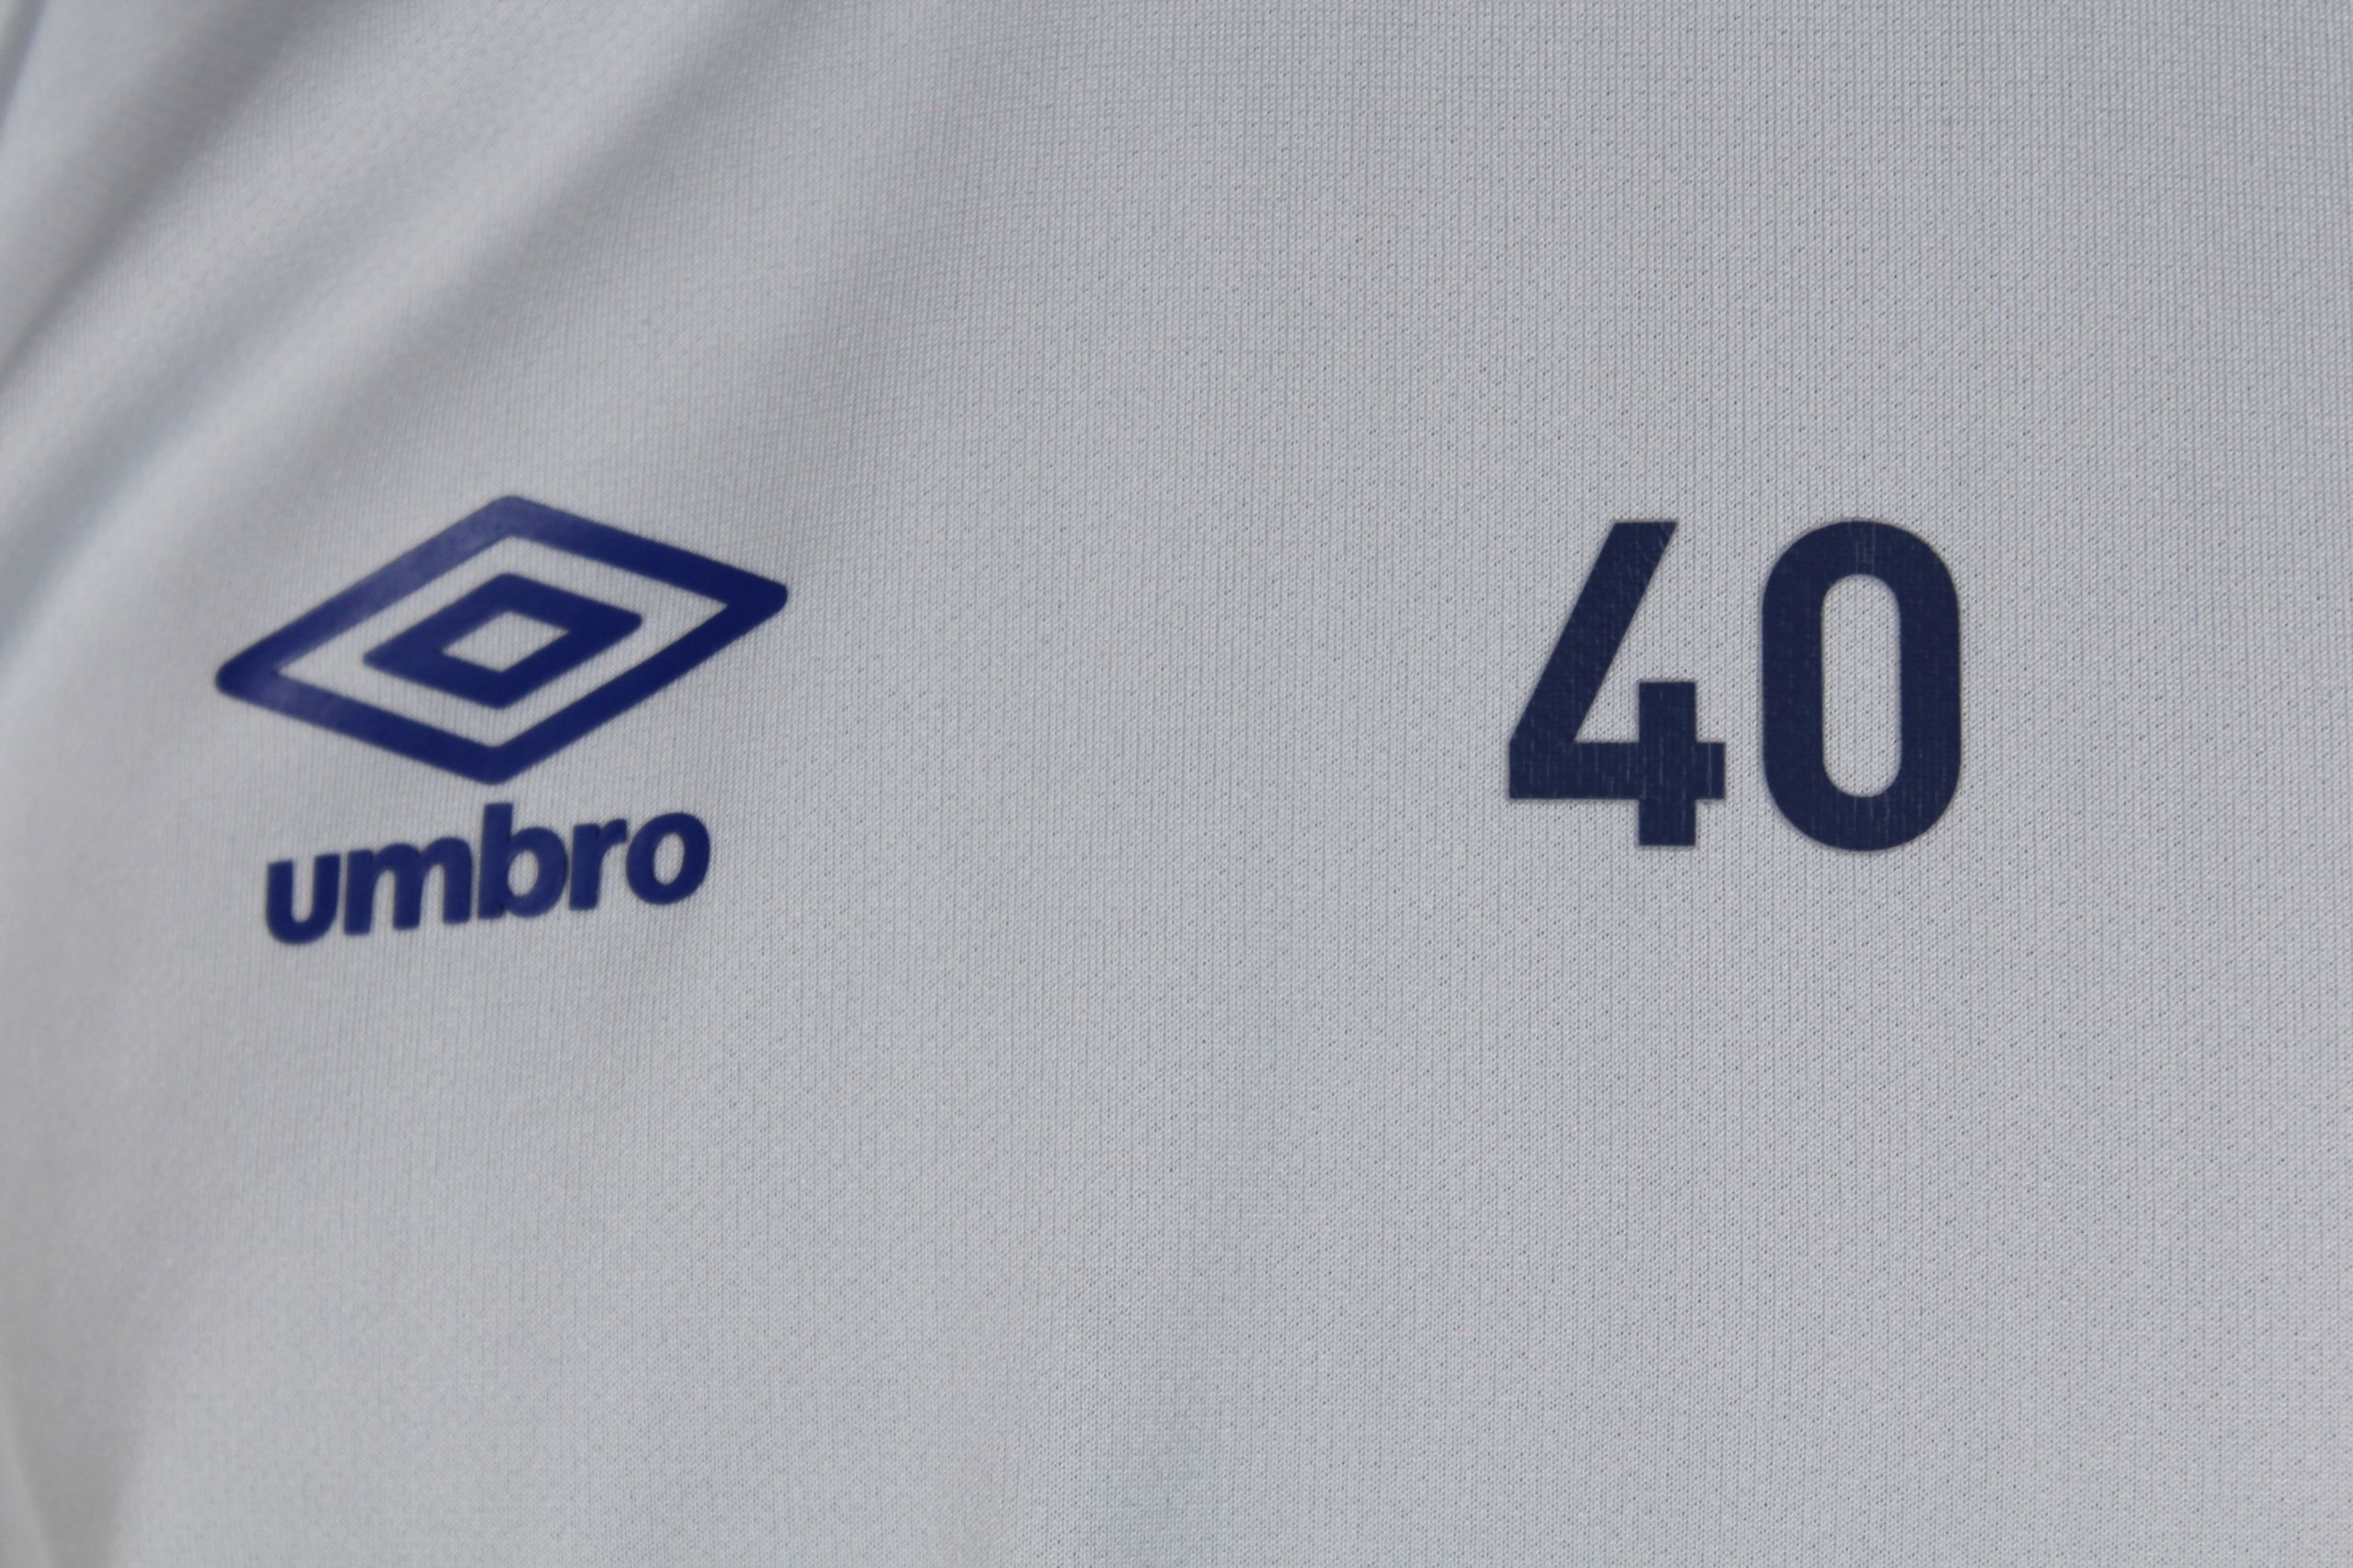 Everton #40 Koszulka Piłkarska Treningowa Umbro L